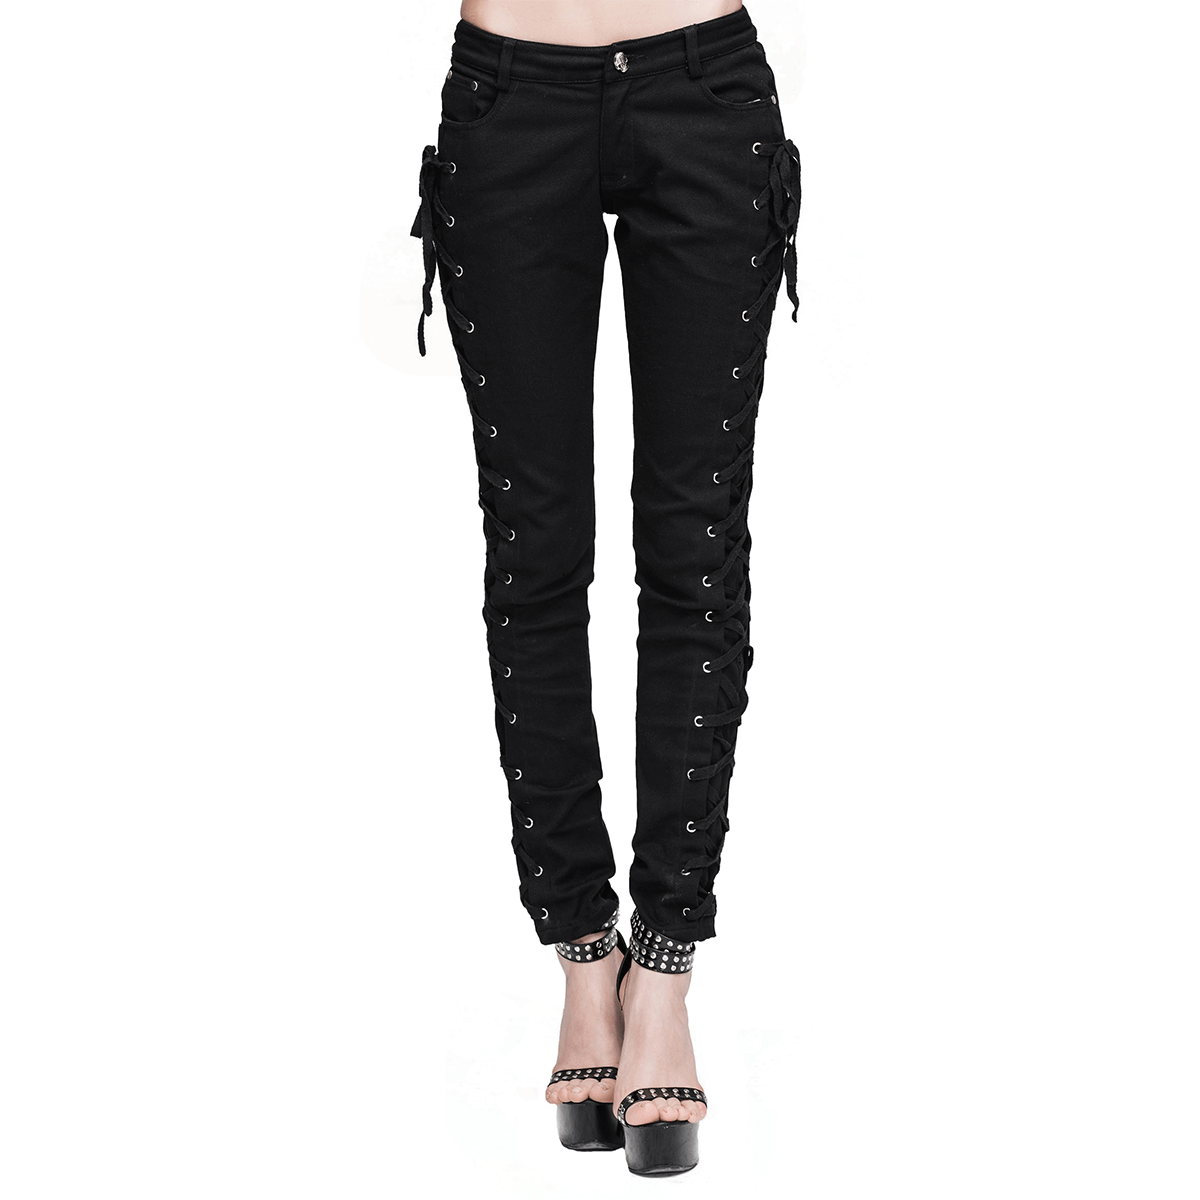 Cropped Cotton Trousers - Black - ARKET | Black trousers, Trousers women,  Slim fit trousers